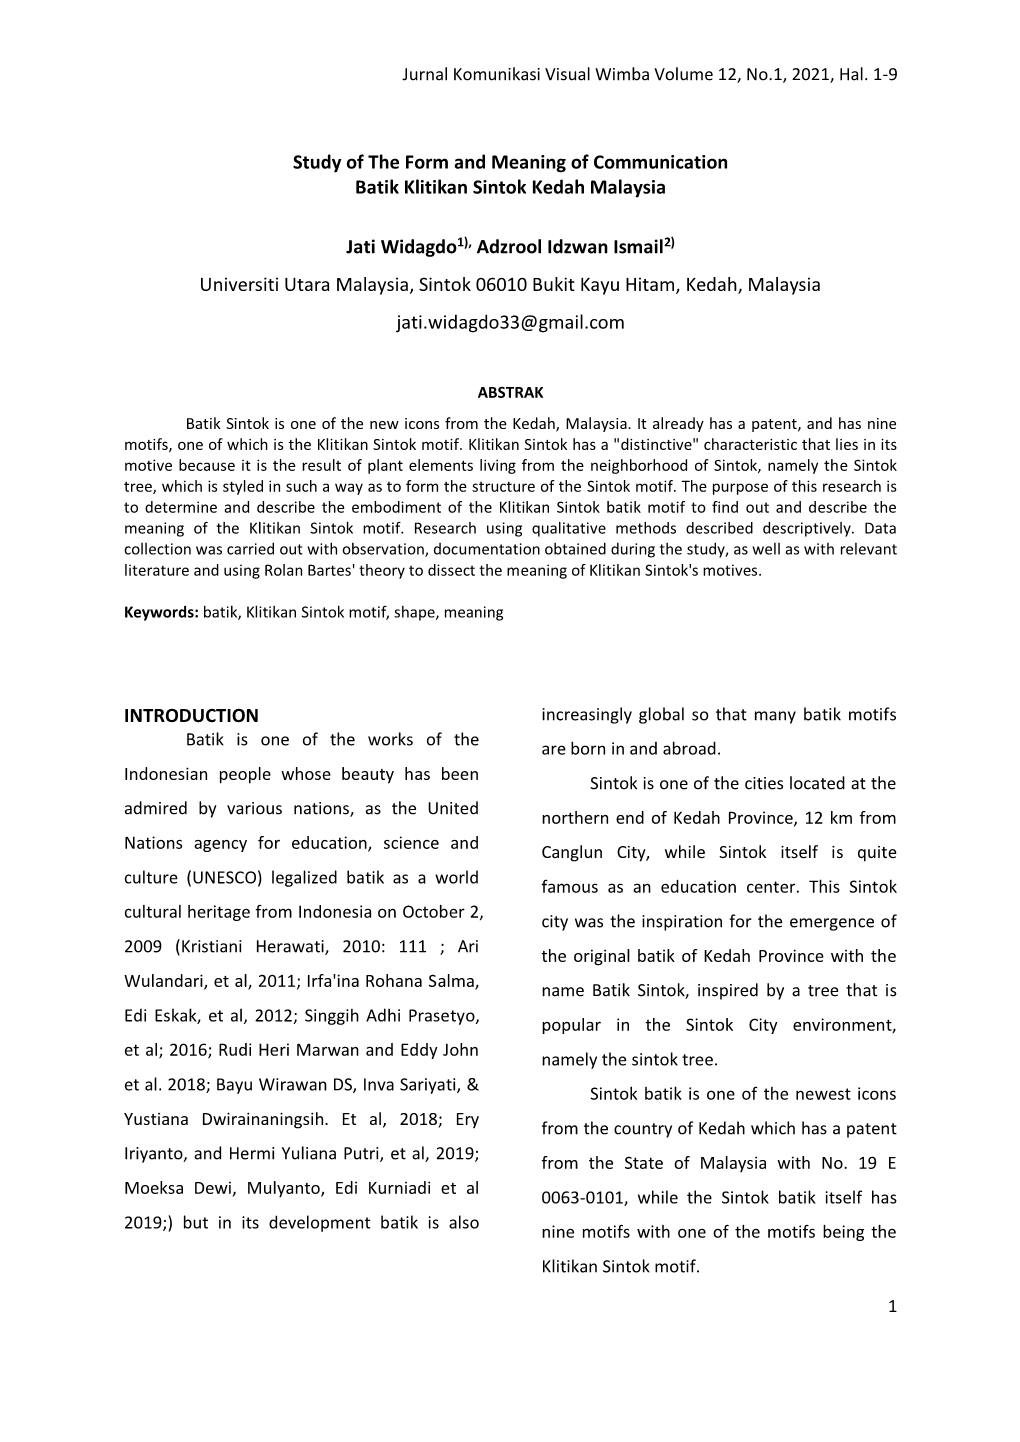 Study of the Form and Meaning of Communication Batik Klitikan Sintok Kedah Malaysia